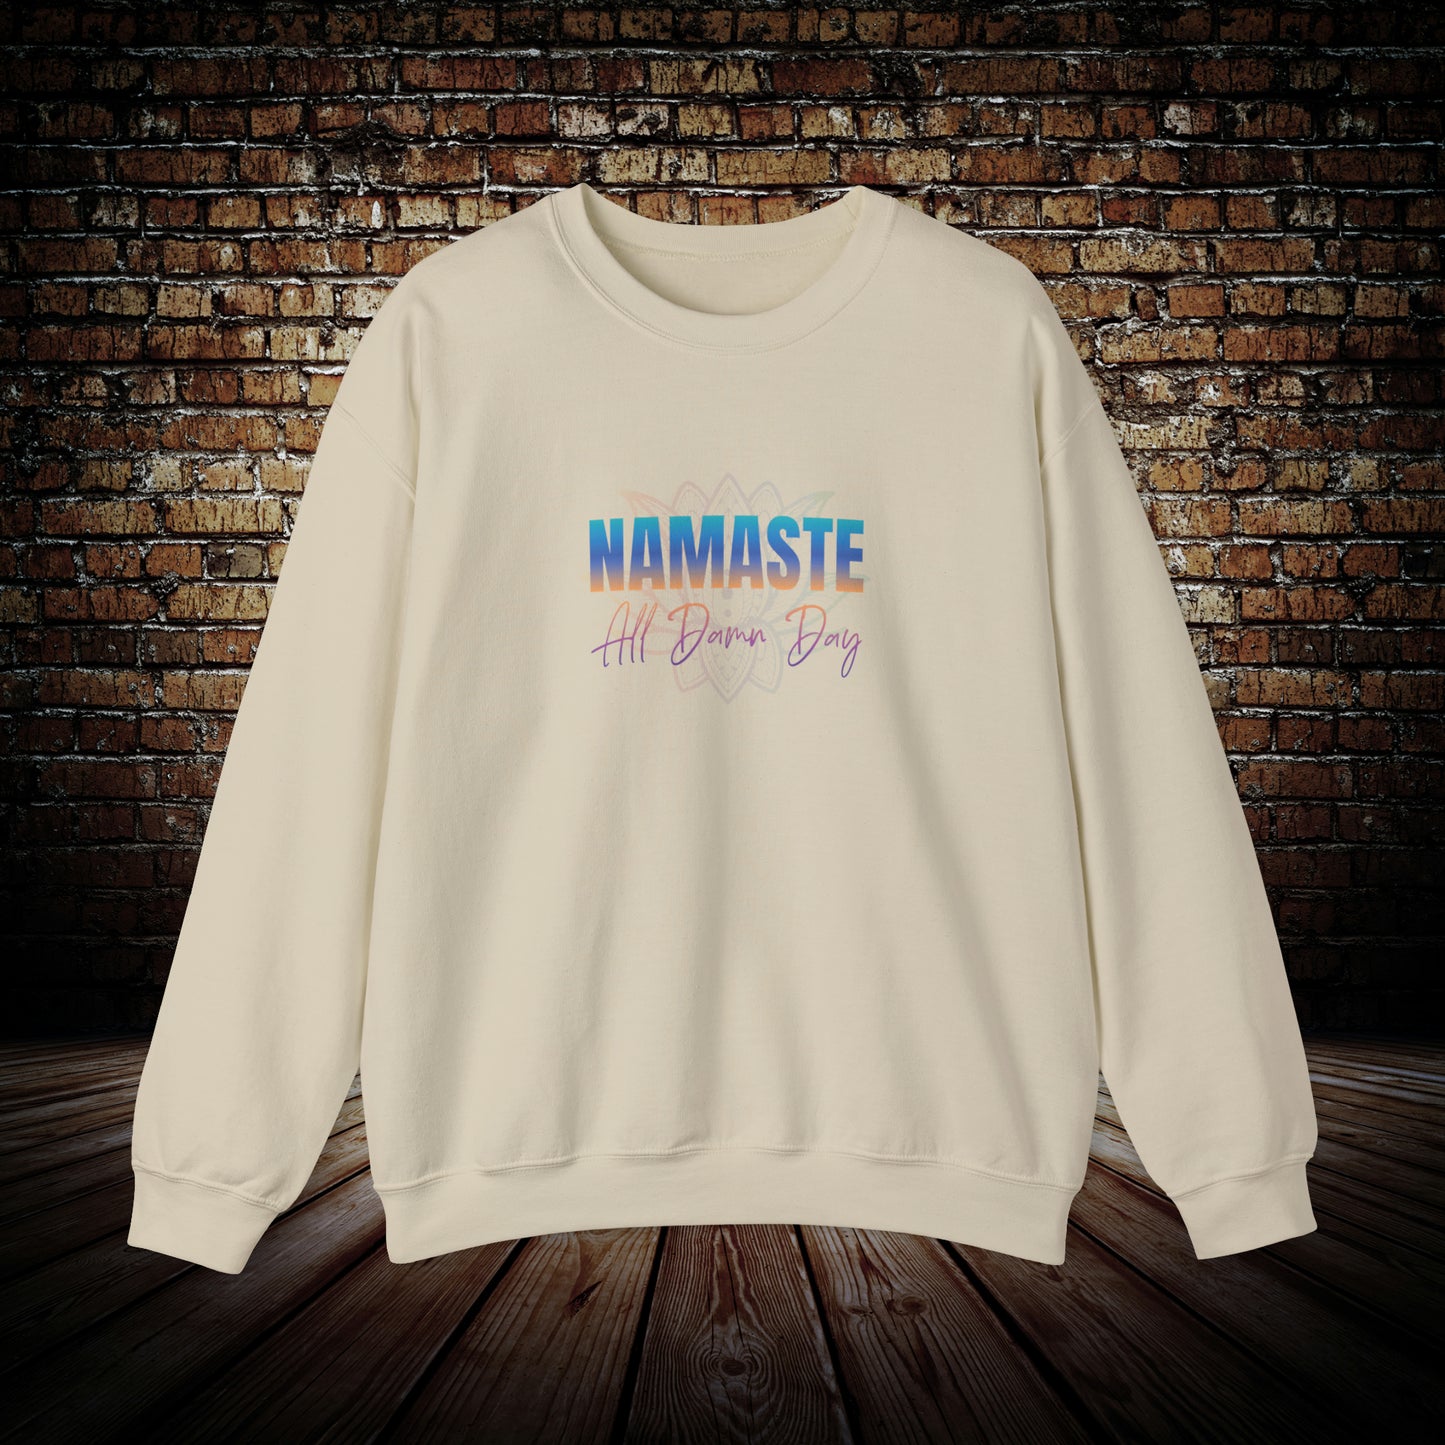 Namaste all damn day sweatshirt